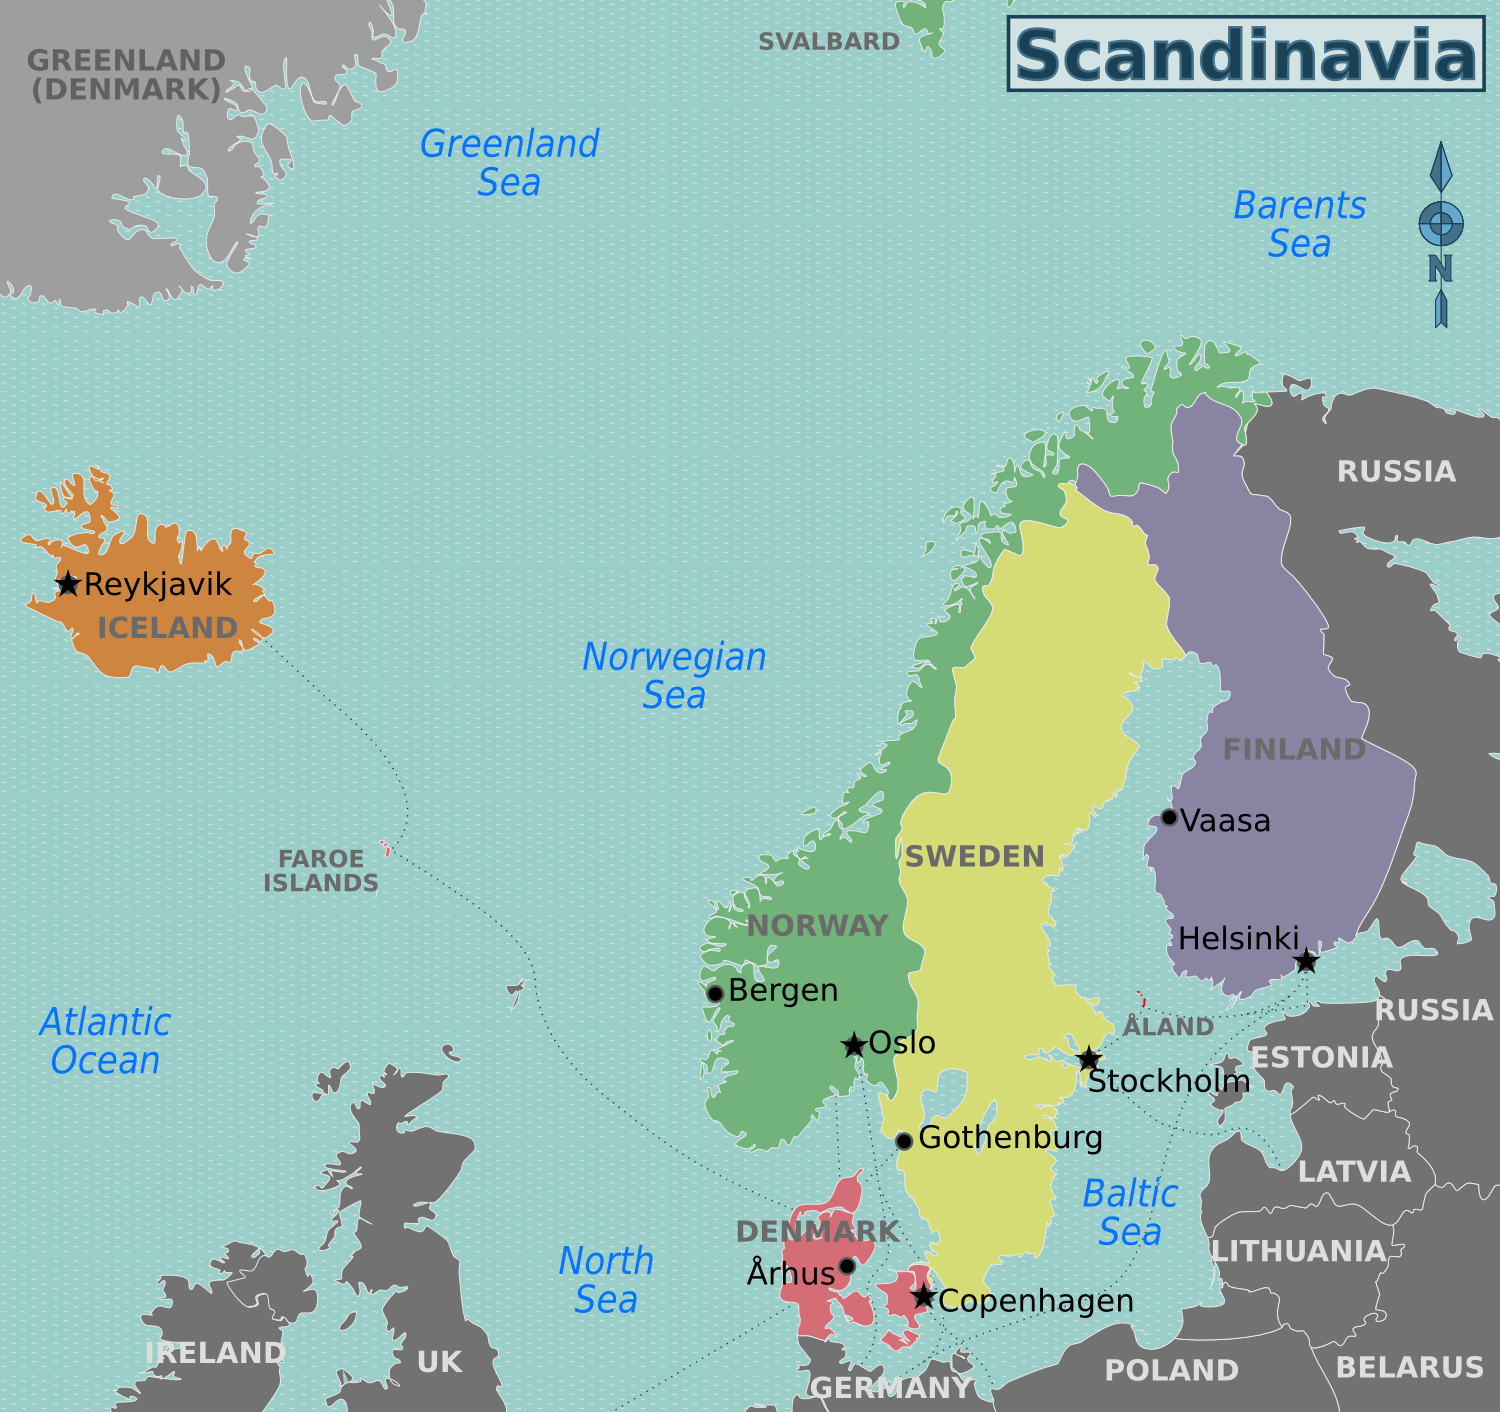 Scandinavia_regions_map.png